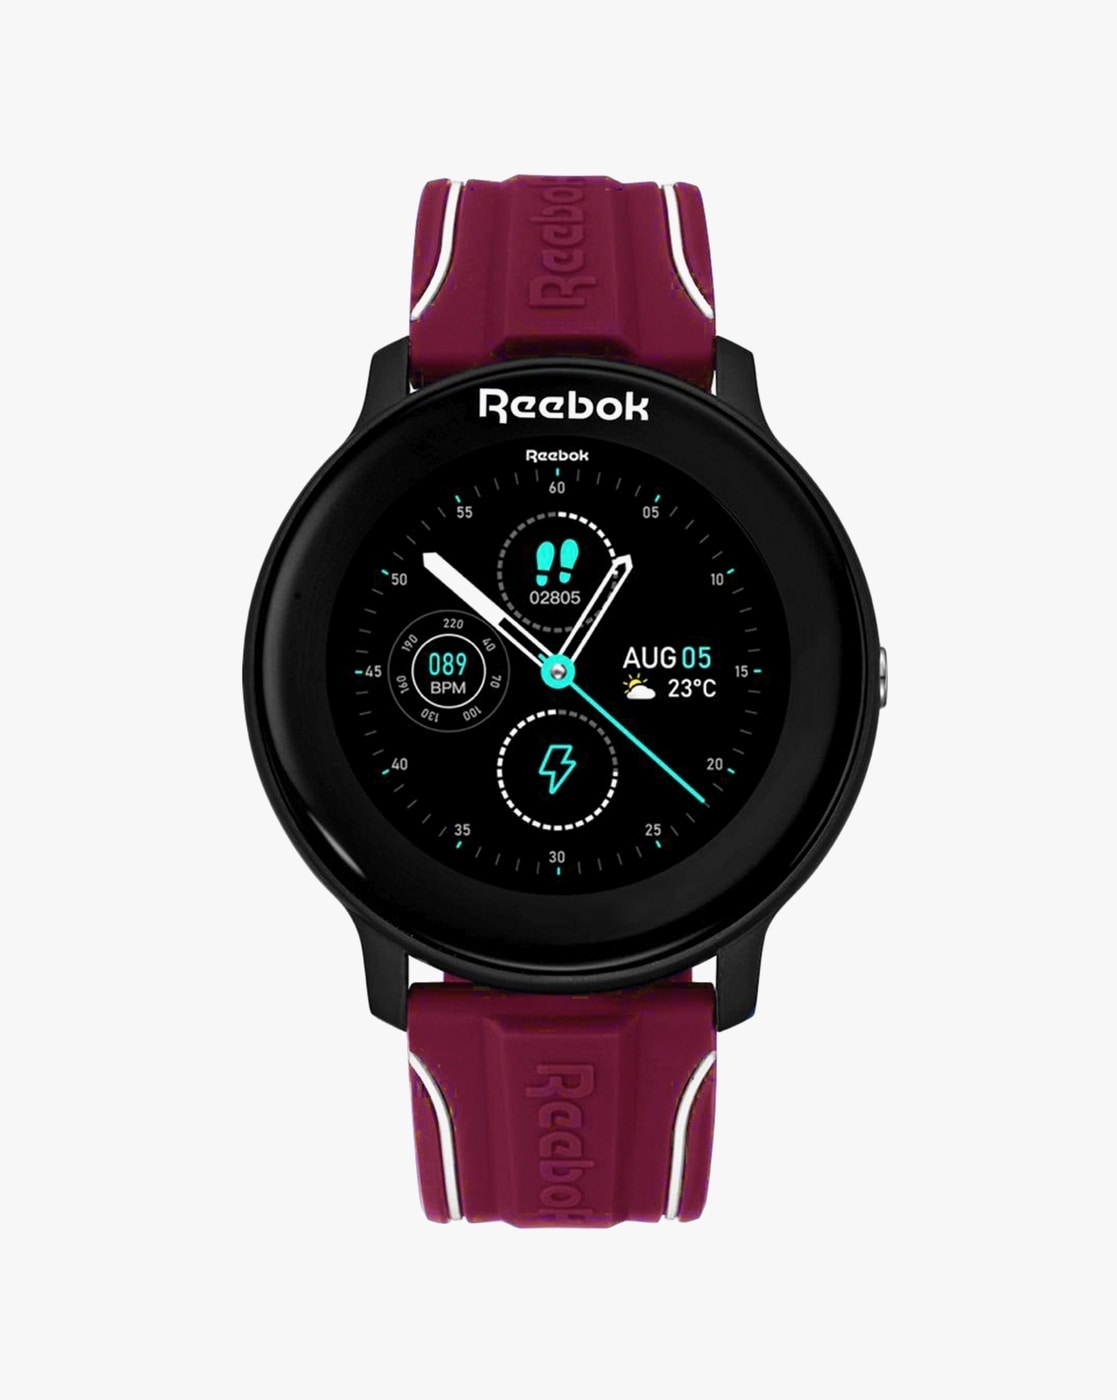 Amazon Offer On Reebok Smart Watch Reebok ActiveFit 1.0 Smartwatch Price  Best Fitness Watch Under 5000rs Best Smart Watch Deal | Amazon Deal: Reebok  की पहली Smartwatch पर लॉन्च होते ही 40%